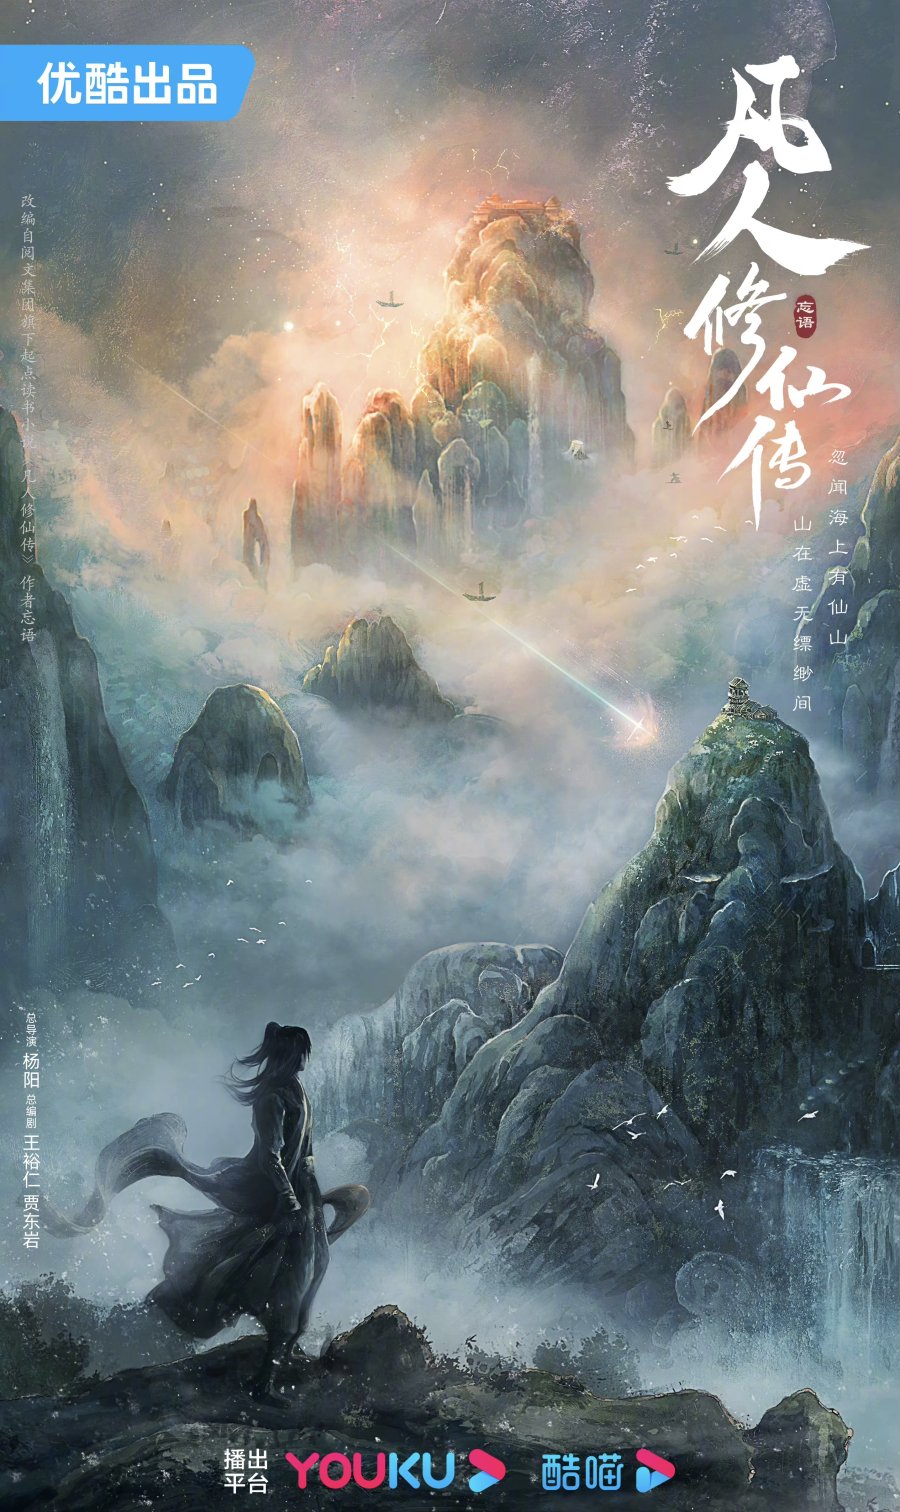 Yang Yang's “The King's Avatar” Airs Last Episode –